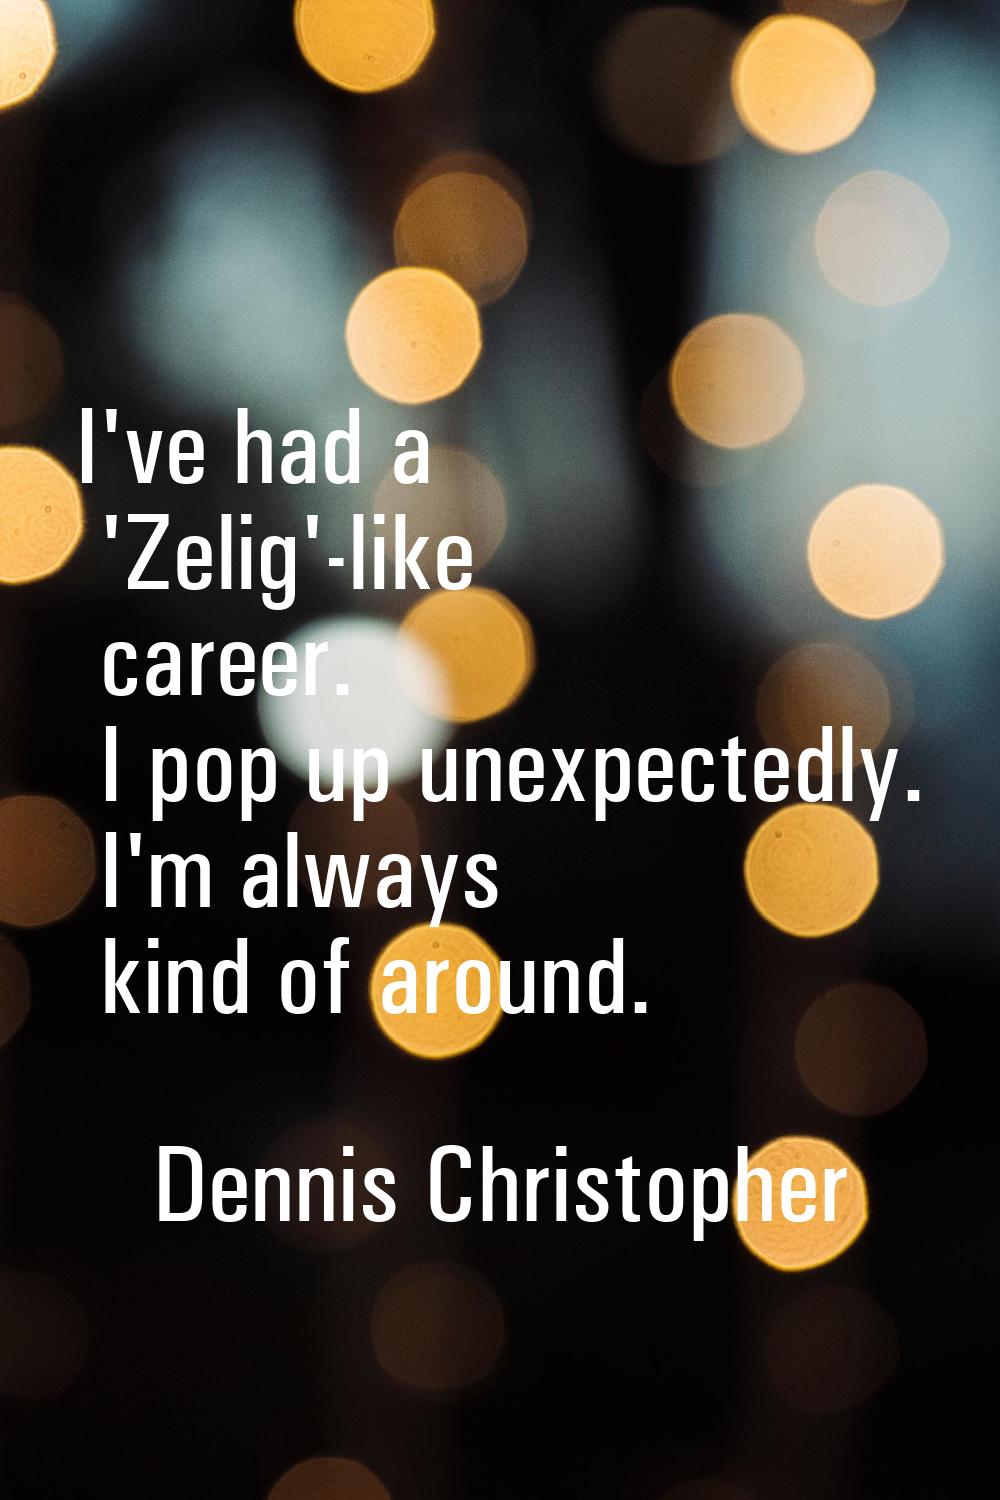 I've had a 'Zelig'-like career. I pop up unexpectedly. I'm always kind of around.